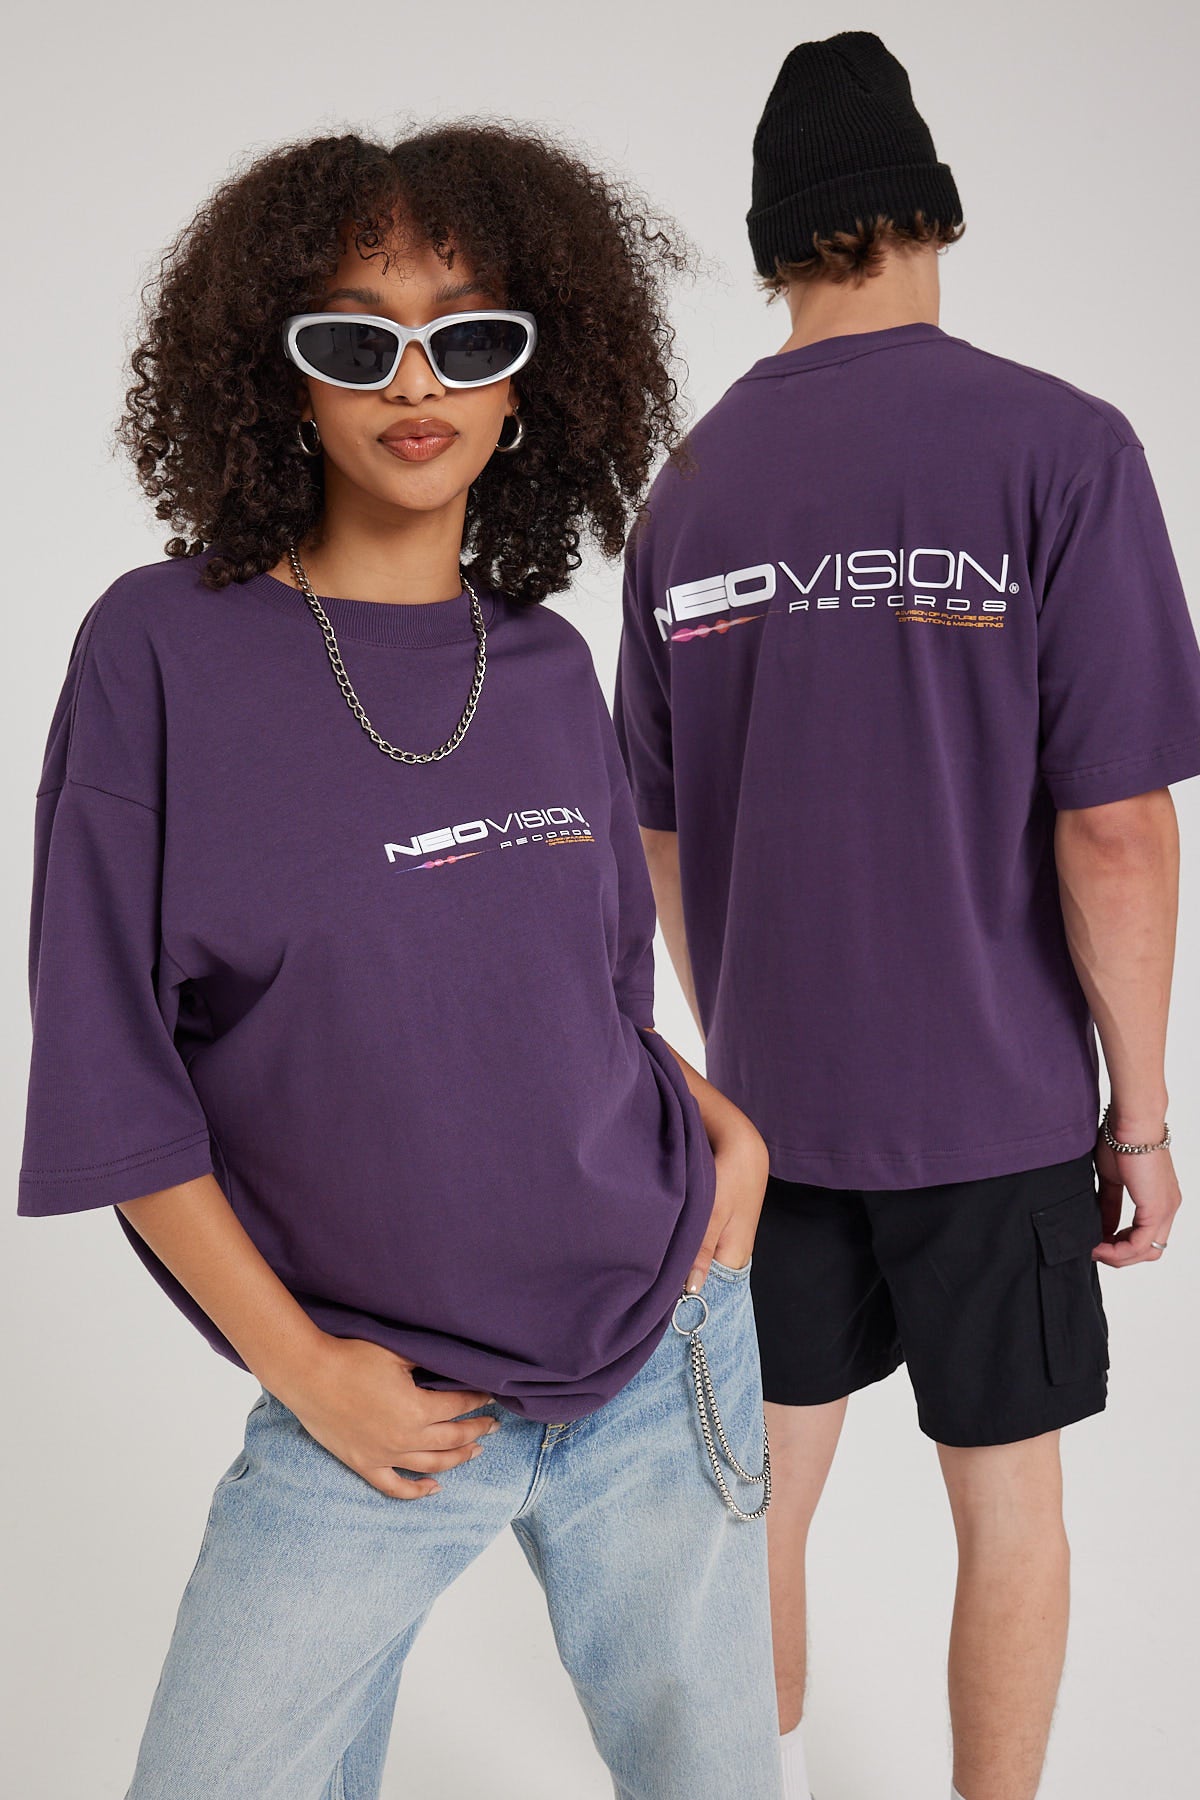 Neovision Records Oversize Super Heavy Tee Purple